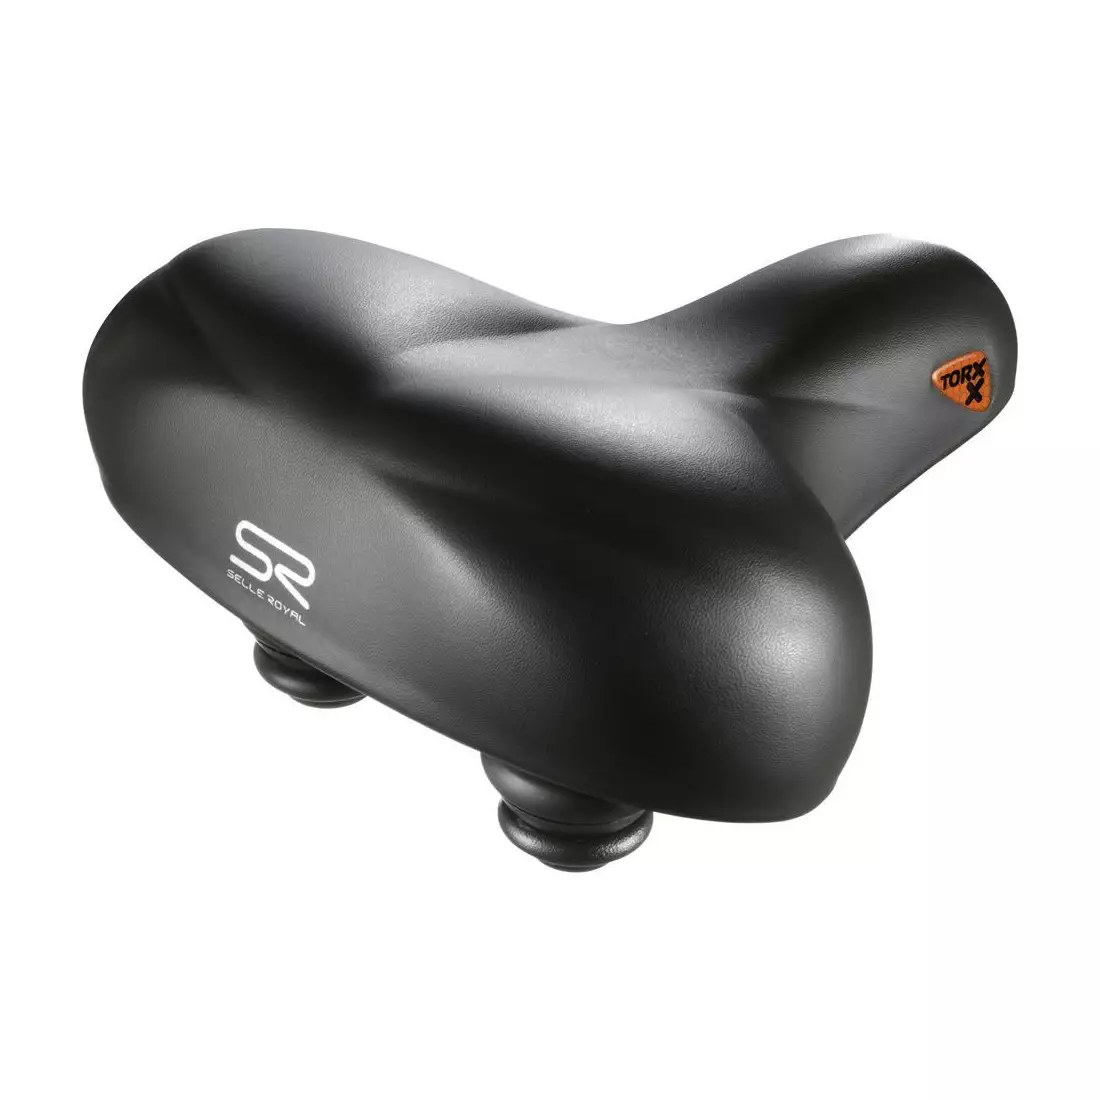 SELLEROYAL bicycle saddle premium relaxed torx gel + elastomers SR-5199UECA55301